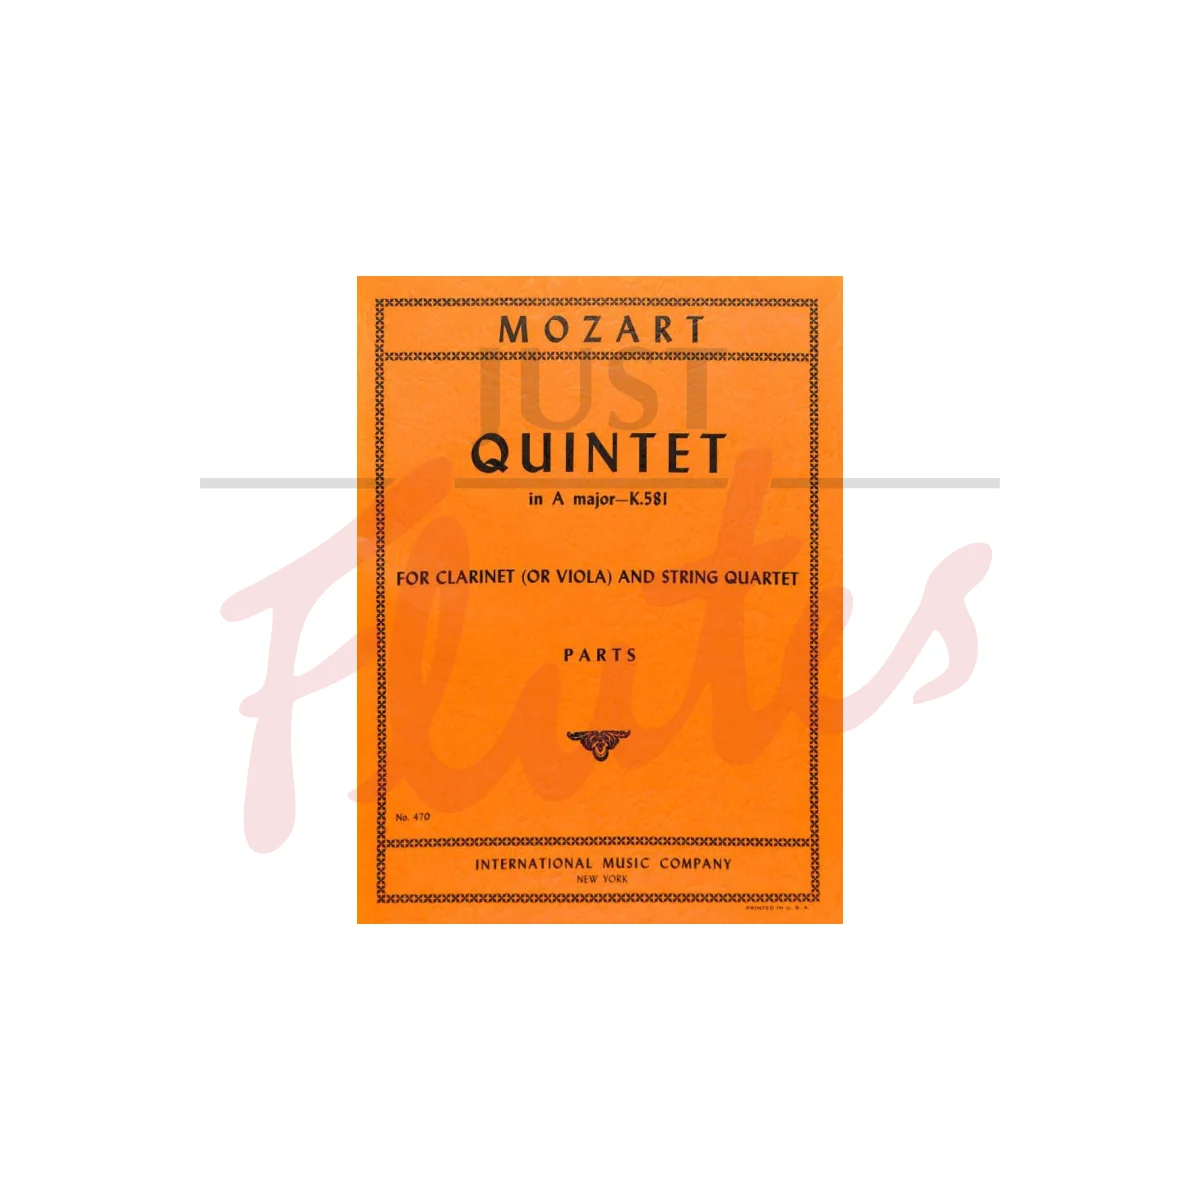 Quintet in A major for Clainet/Viola and String Quartet